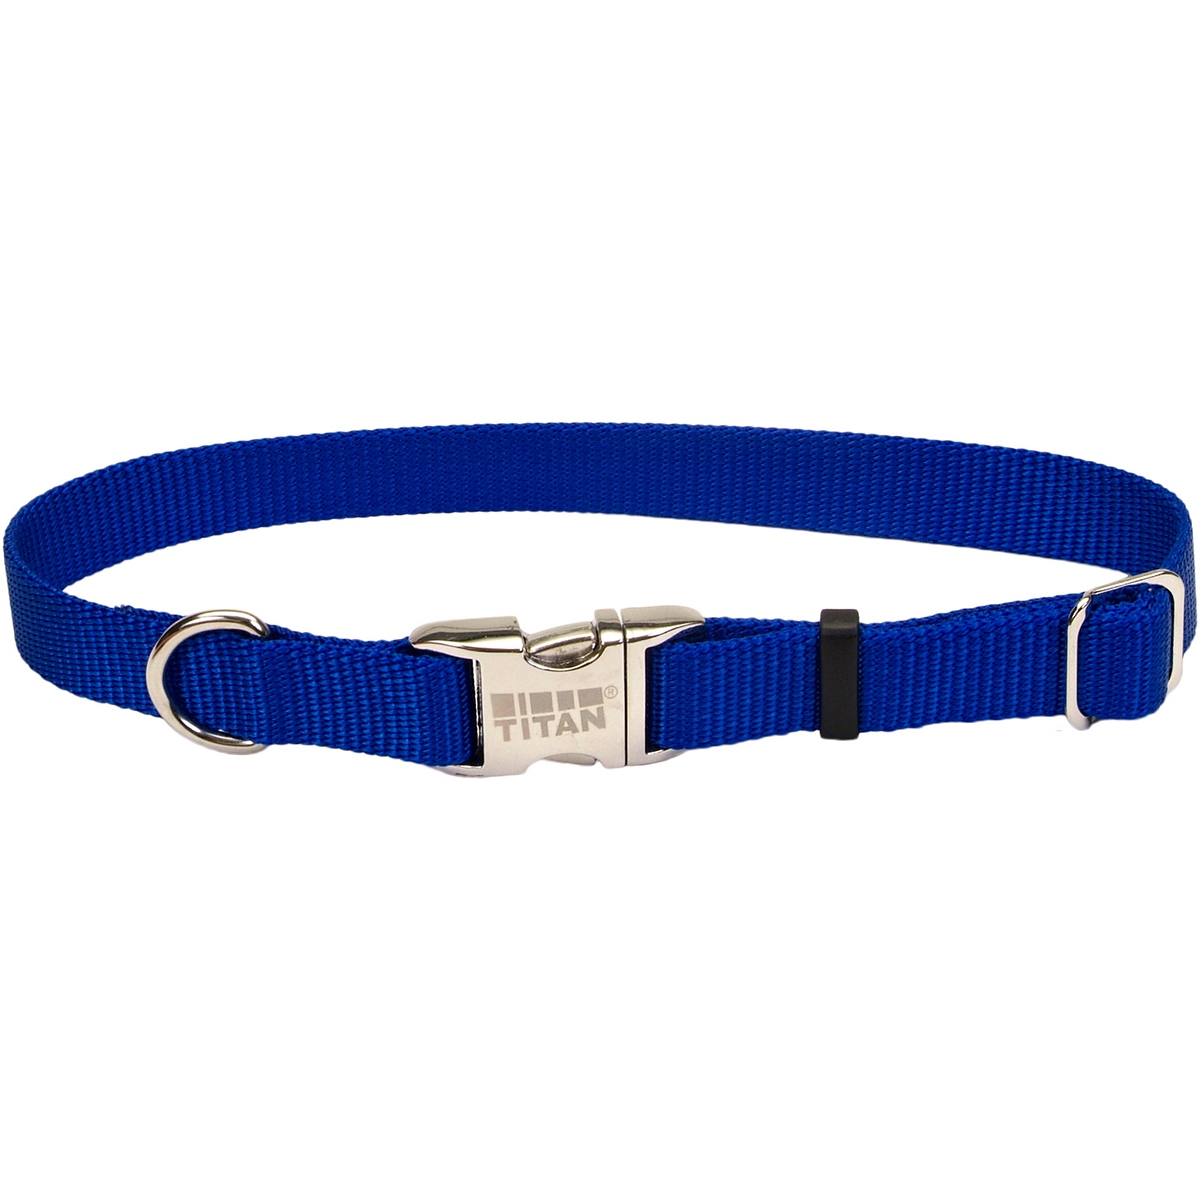 1 X 14 - 20 In. Adjustable Nylon Dog Collar With Tuff Buckle, Blue